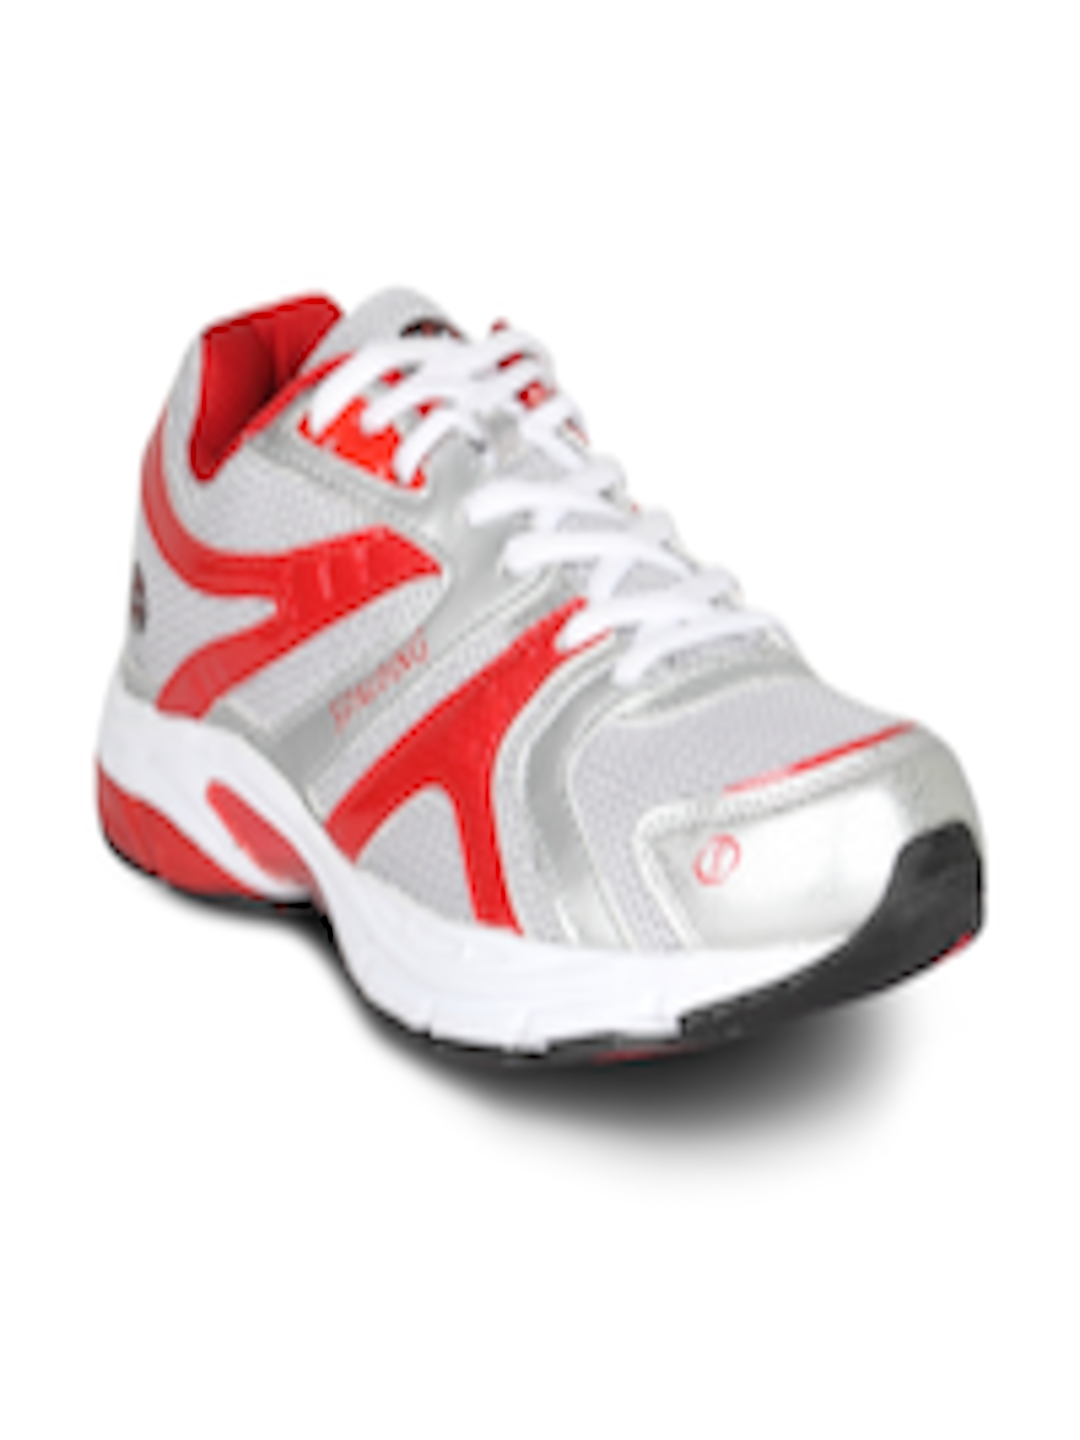 Buy Spalding Men's Running Red Shoe - Sports Shoes for Men 6850 | Myntra